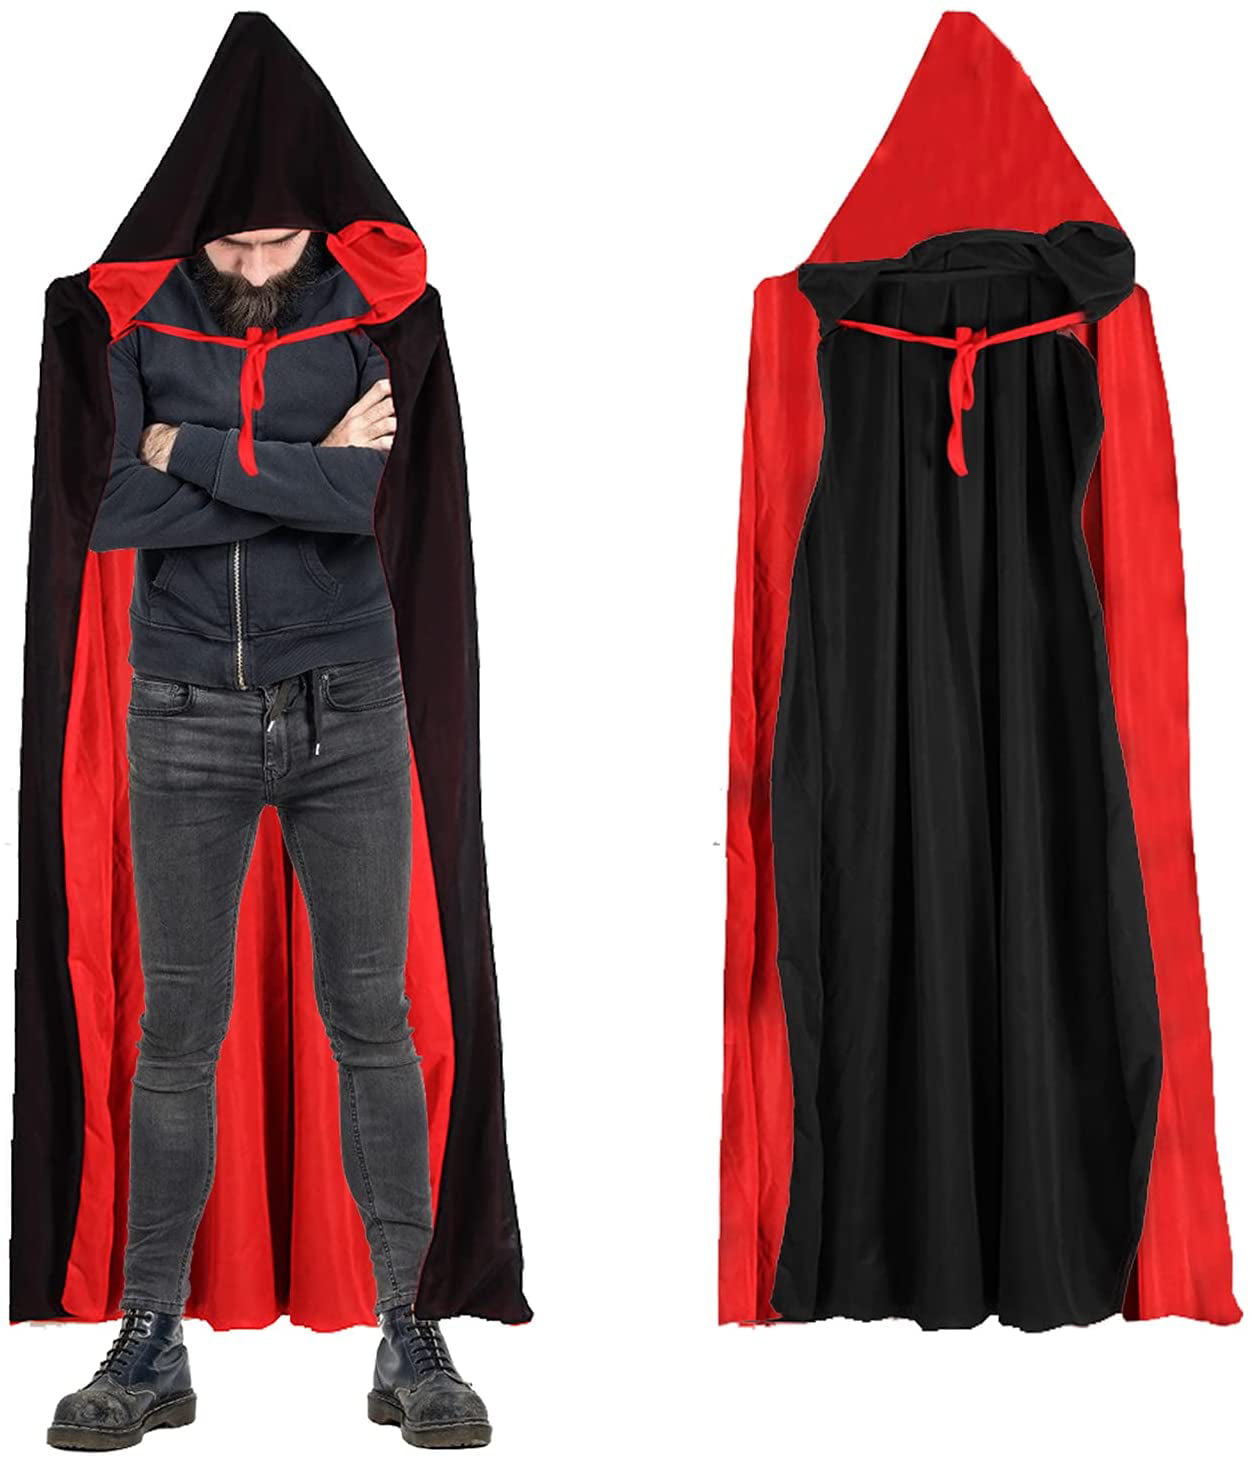 Adults Unisex Black Cloak Cape Party Halloween Cosplay Vampire Costume 